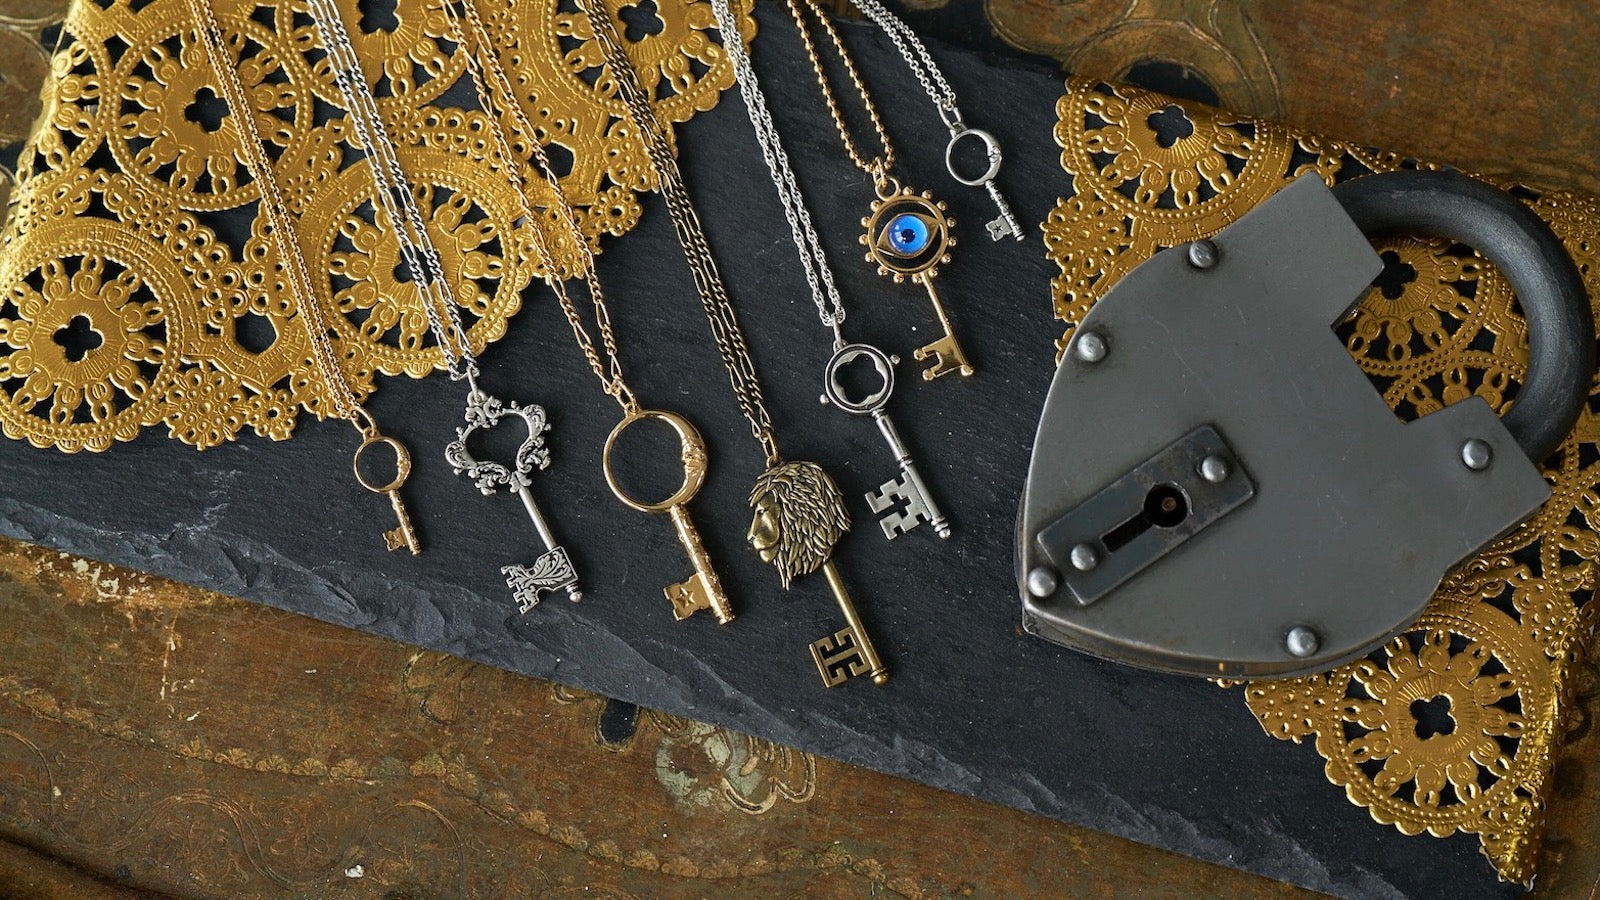 Artful Keys